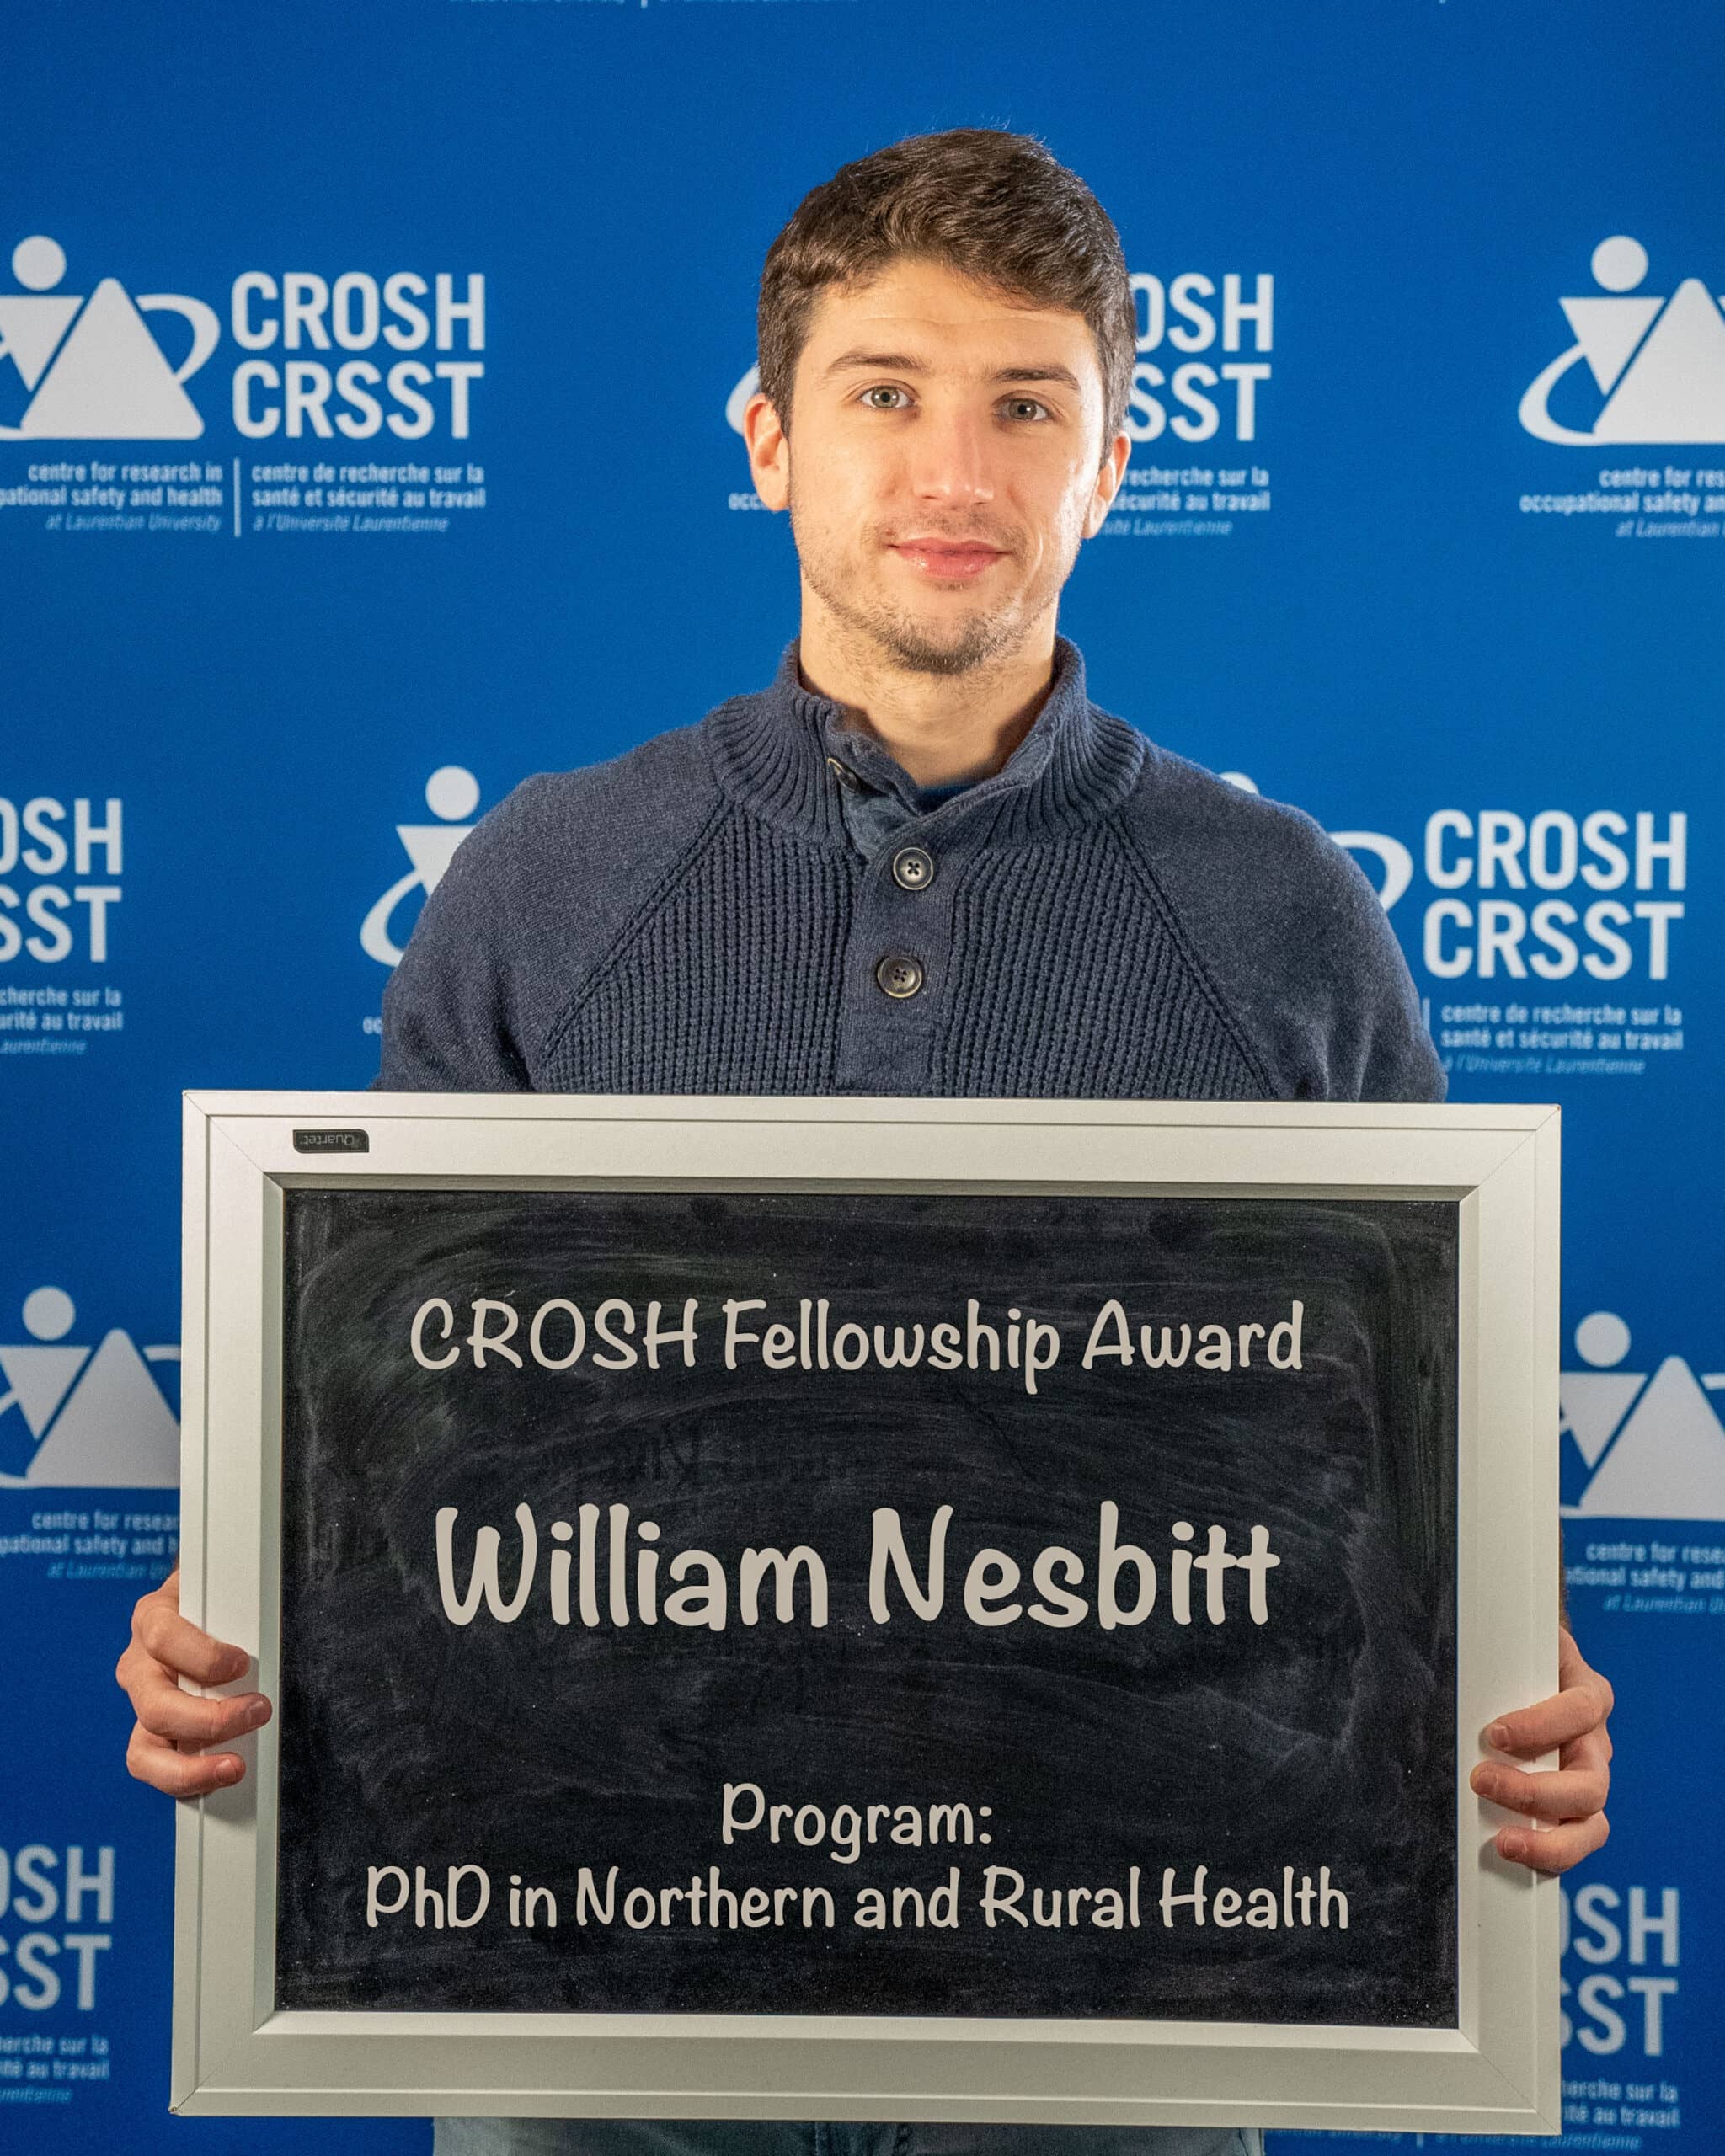 CROSH student member holding a chalkboard that reads "William Nesbitt, CROSH Fellowship Award, Program: PhD in Northern and Rural Health"